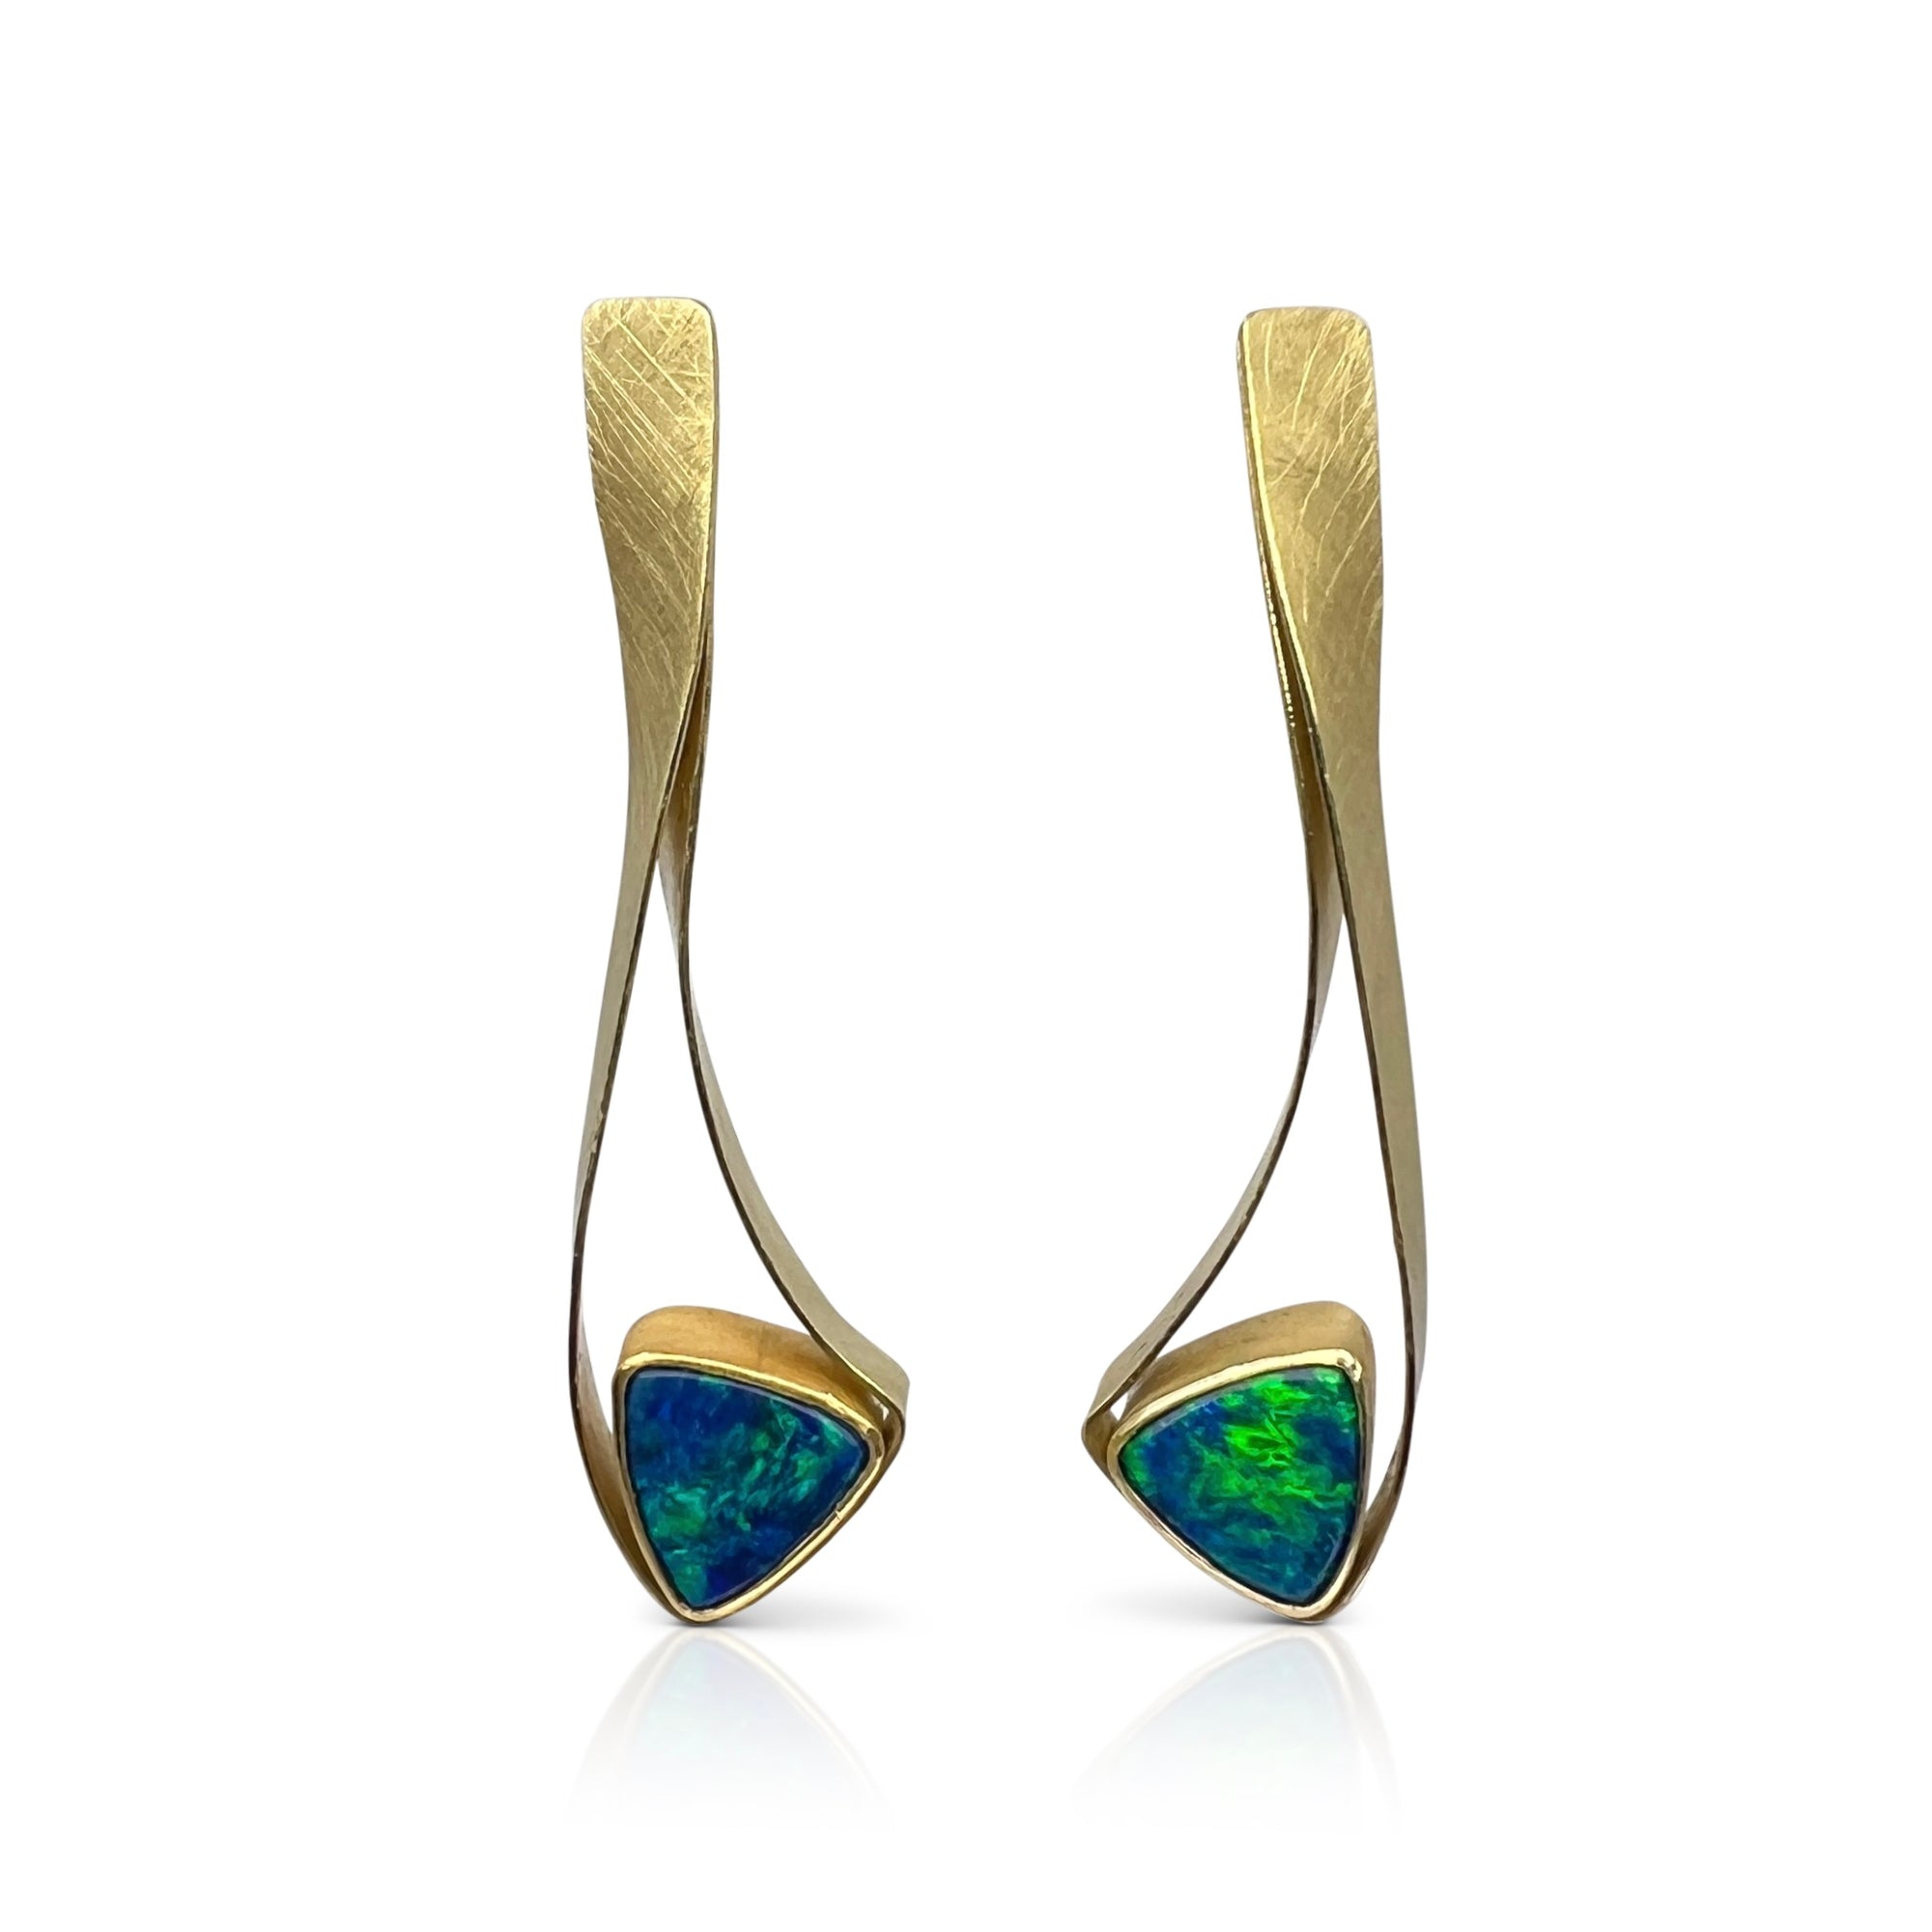 18K yellow gold earrings with blue/green opal doublets 